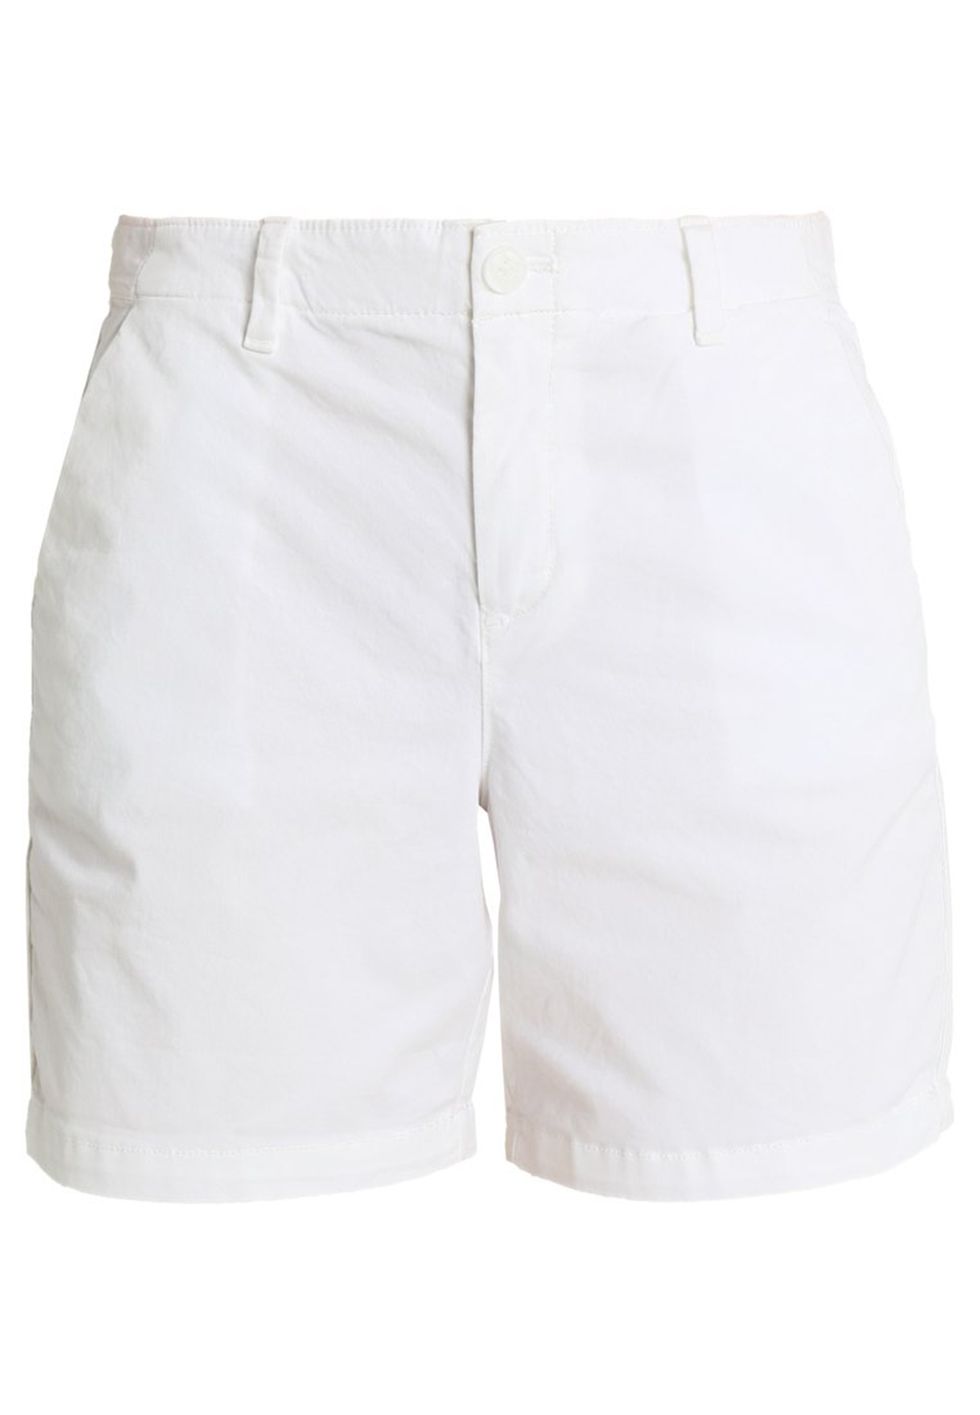 White, Clothing, Shorts, Bermuda shorts, Active shorts, Sportswear, Pocket, rugby short, Trousers, 